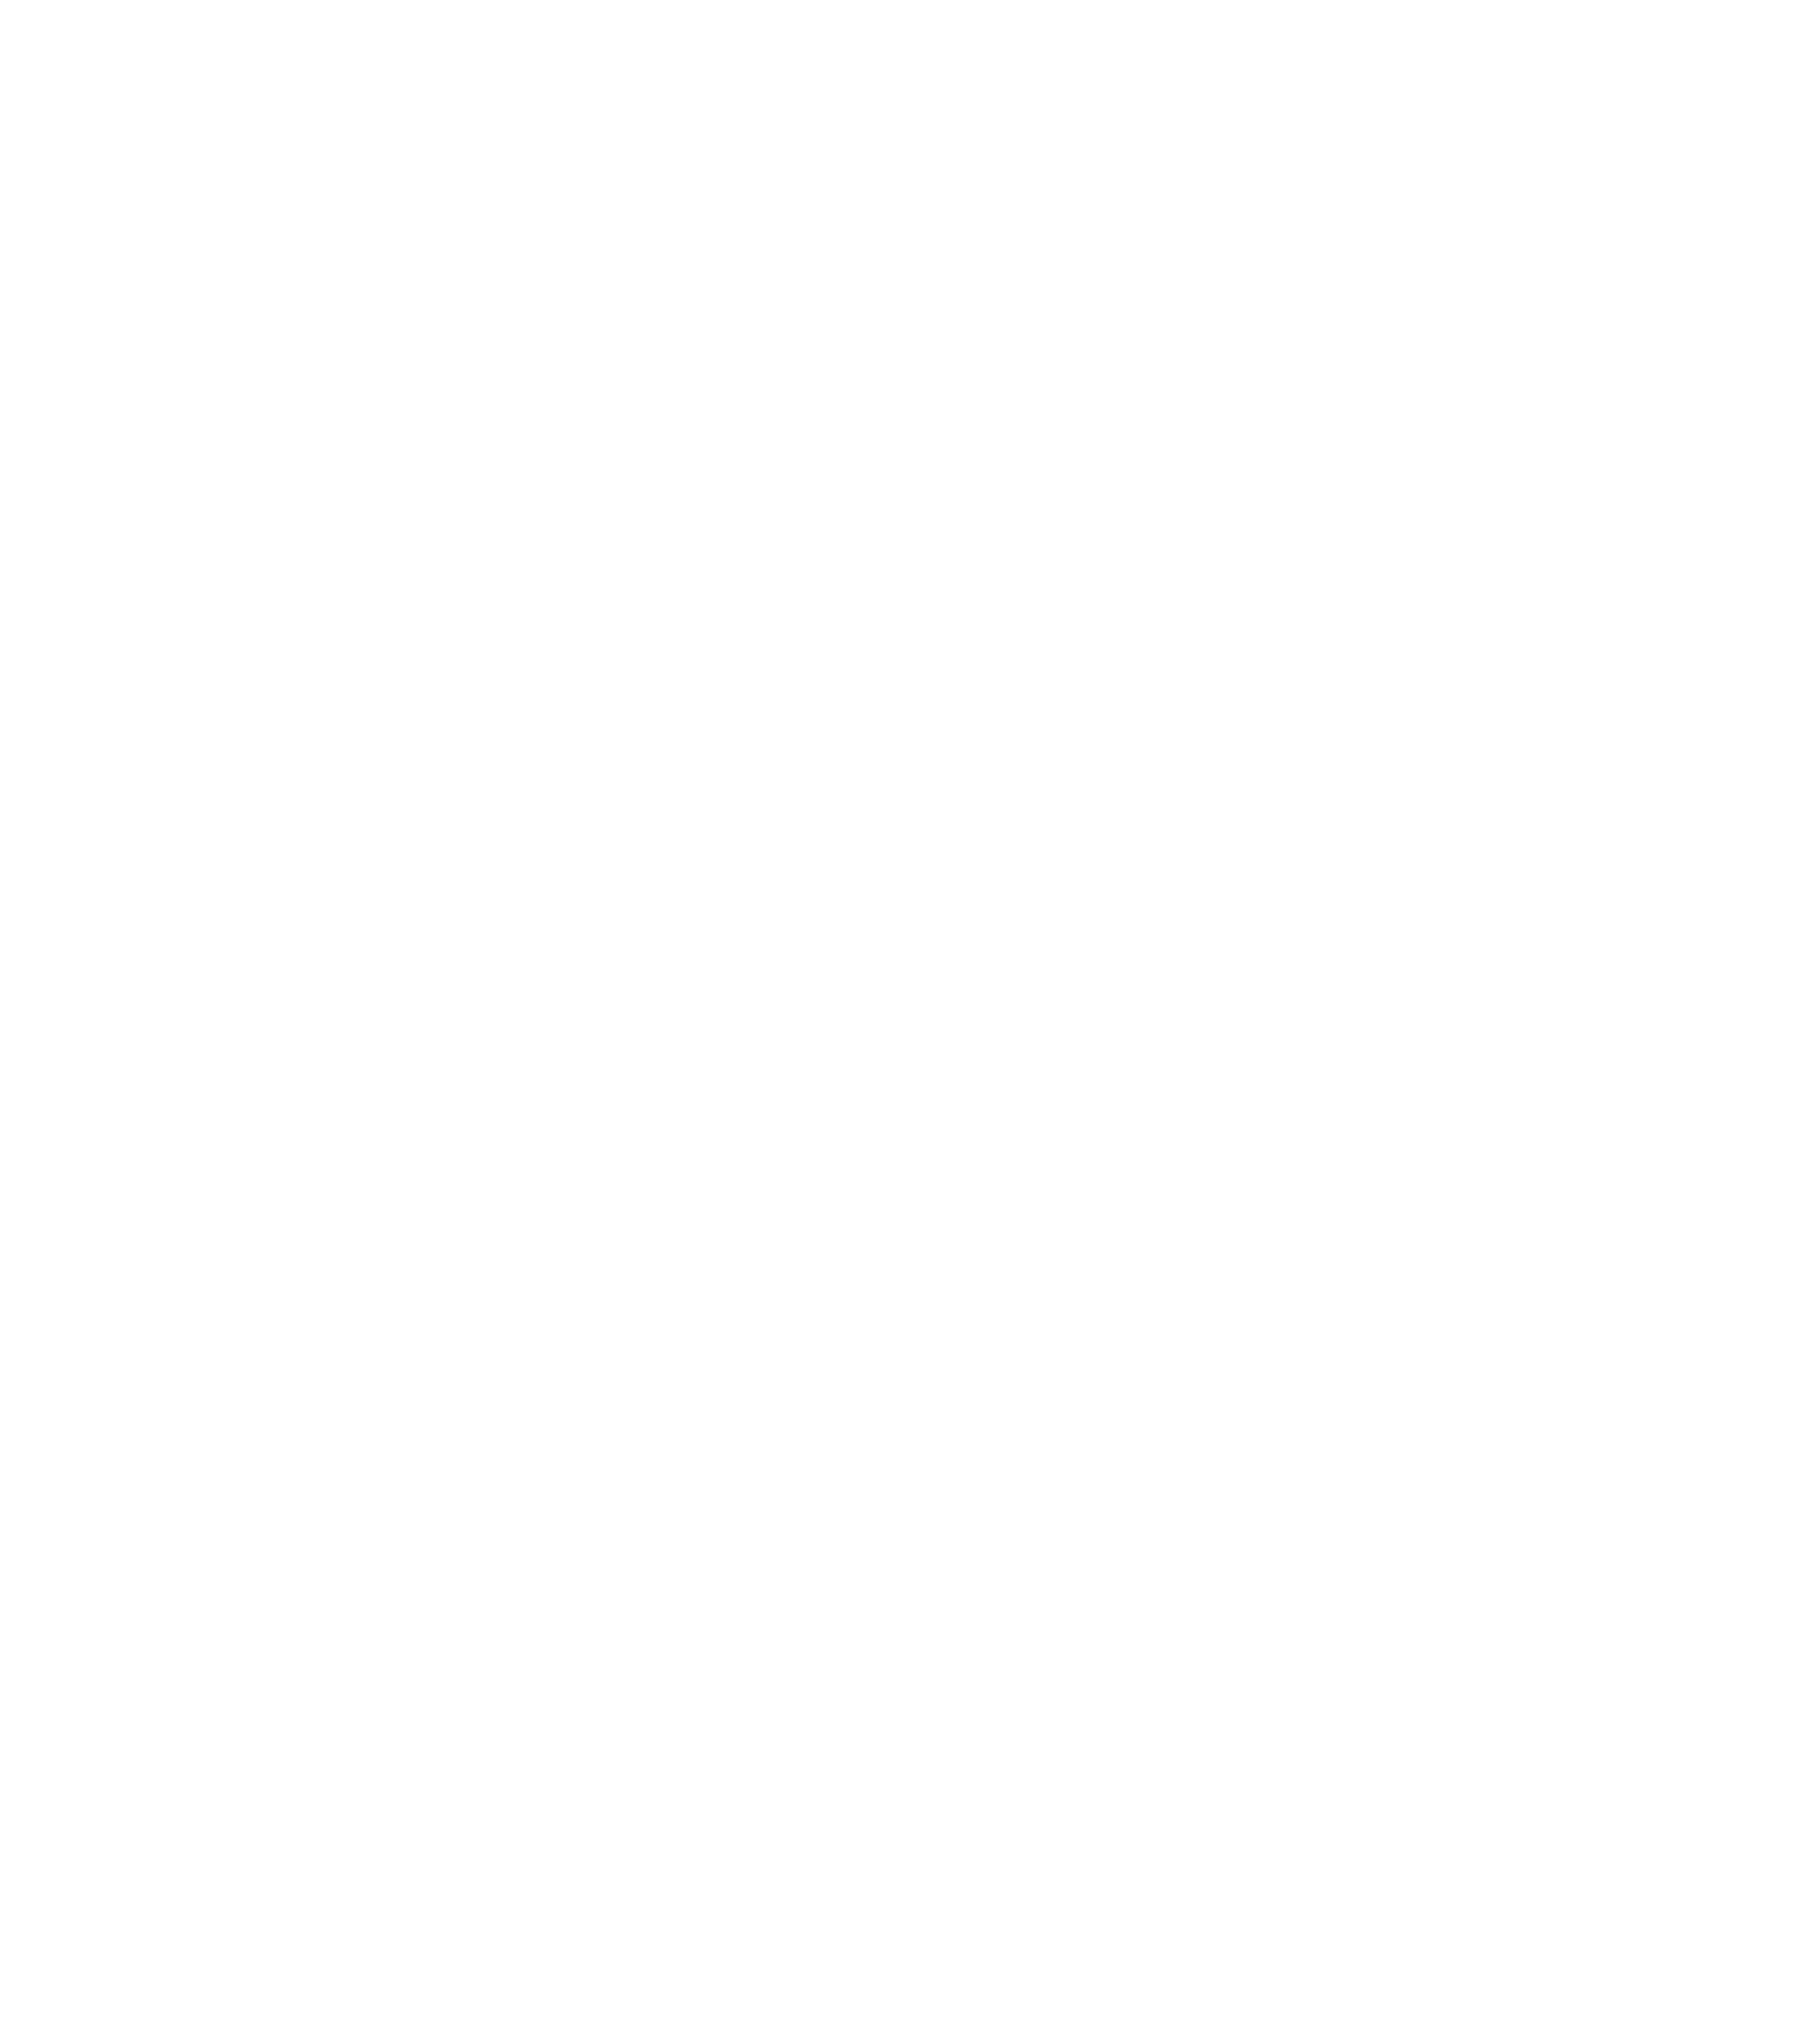 03_HXG_logo.png, 152kB